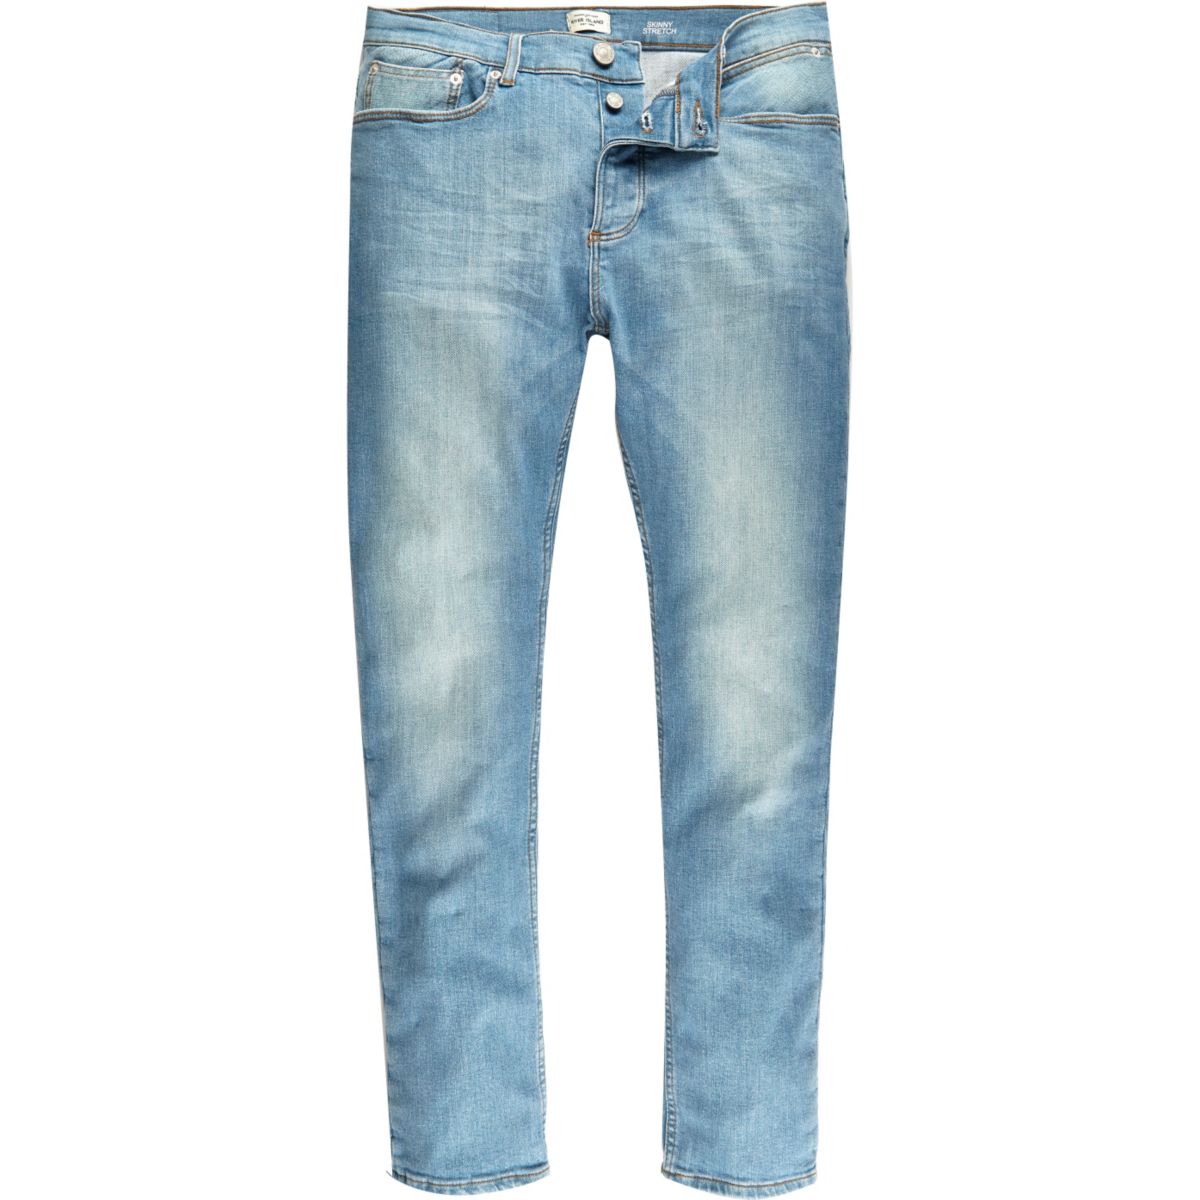 Light blue wash Sid skinny stretch jeans - Jeans - Sale - men